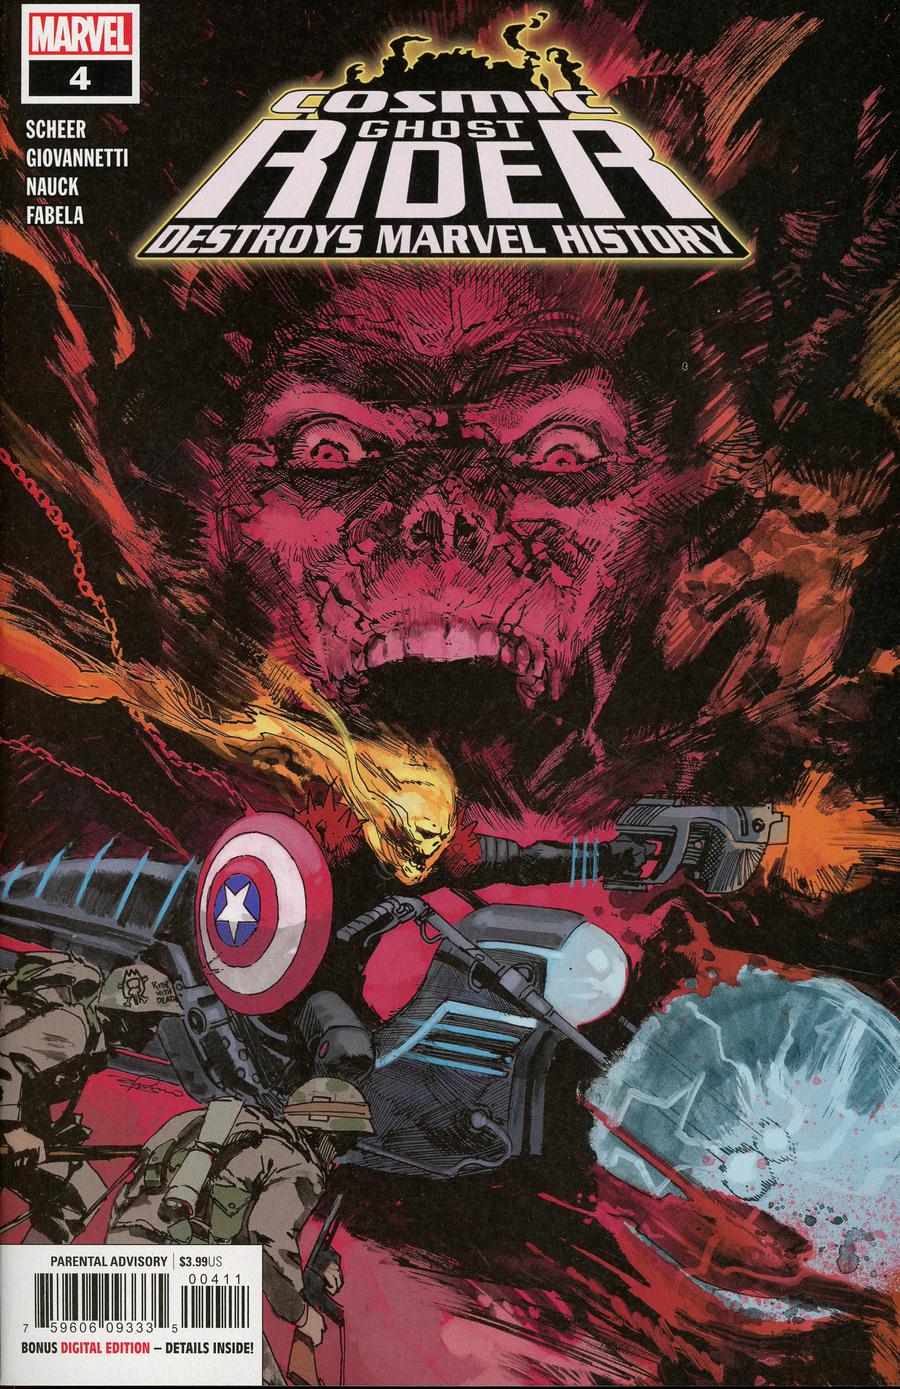 Cosmic Ghost Rider Destroys Marvel History #4 Cover A Regular Gerardo Zaffino Cover